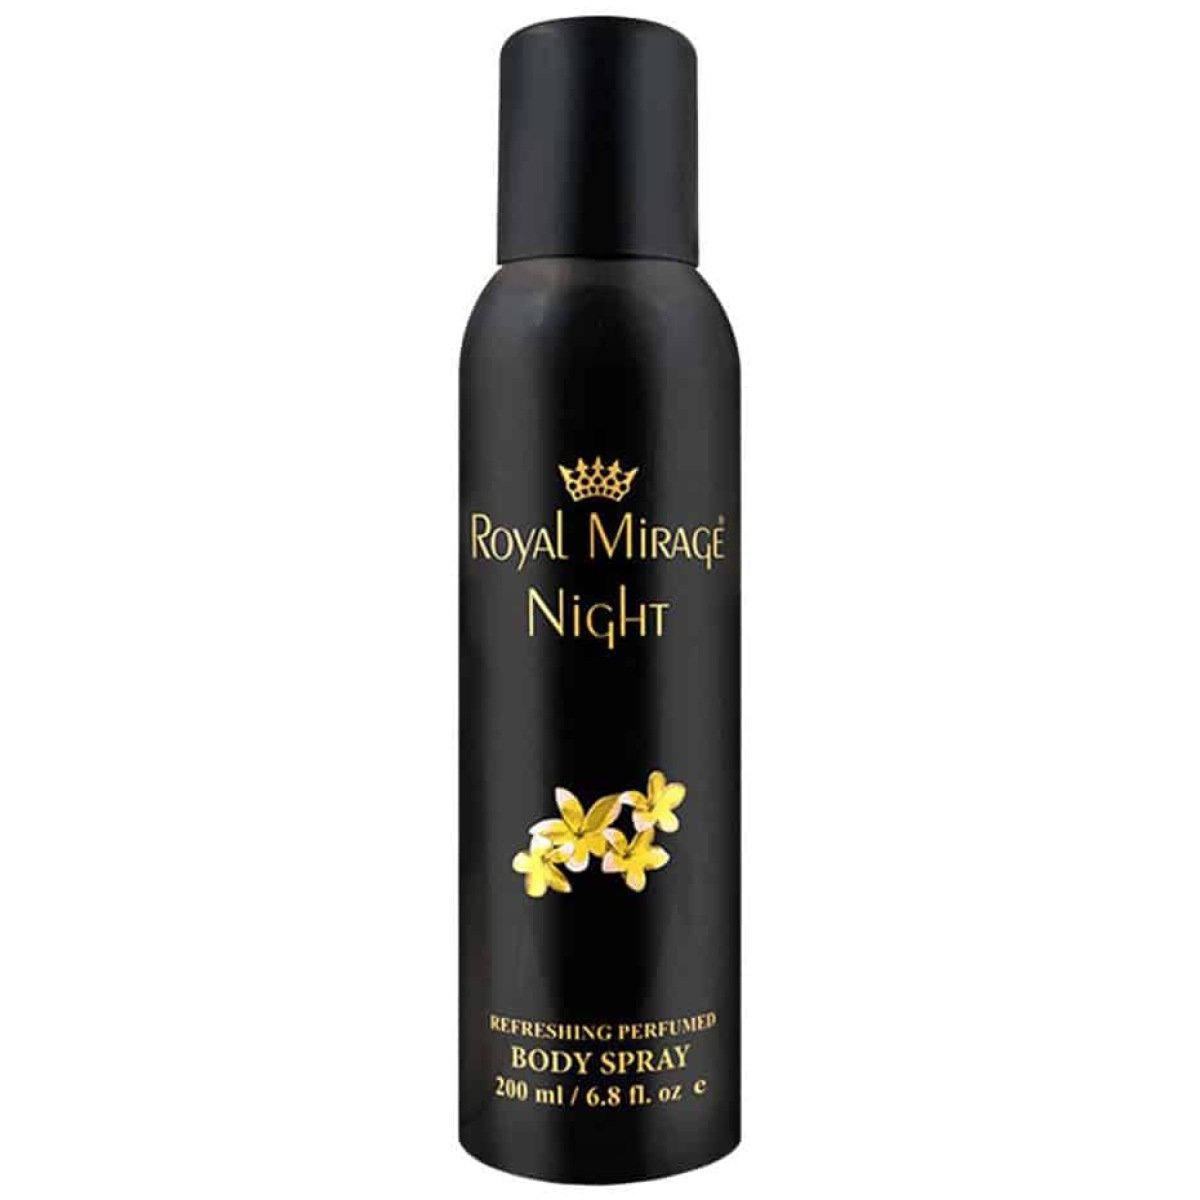 Royal Mirage Night Perfumed Body Deodorant Spray 200ml